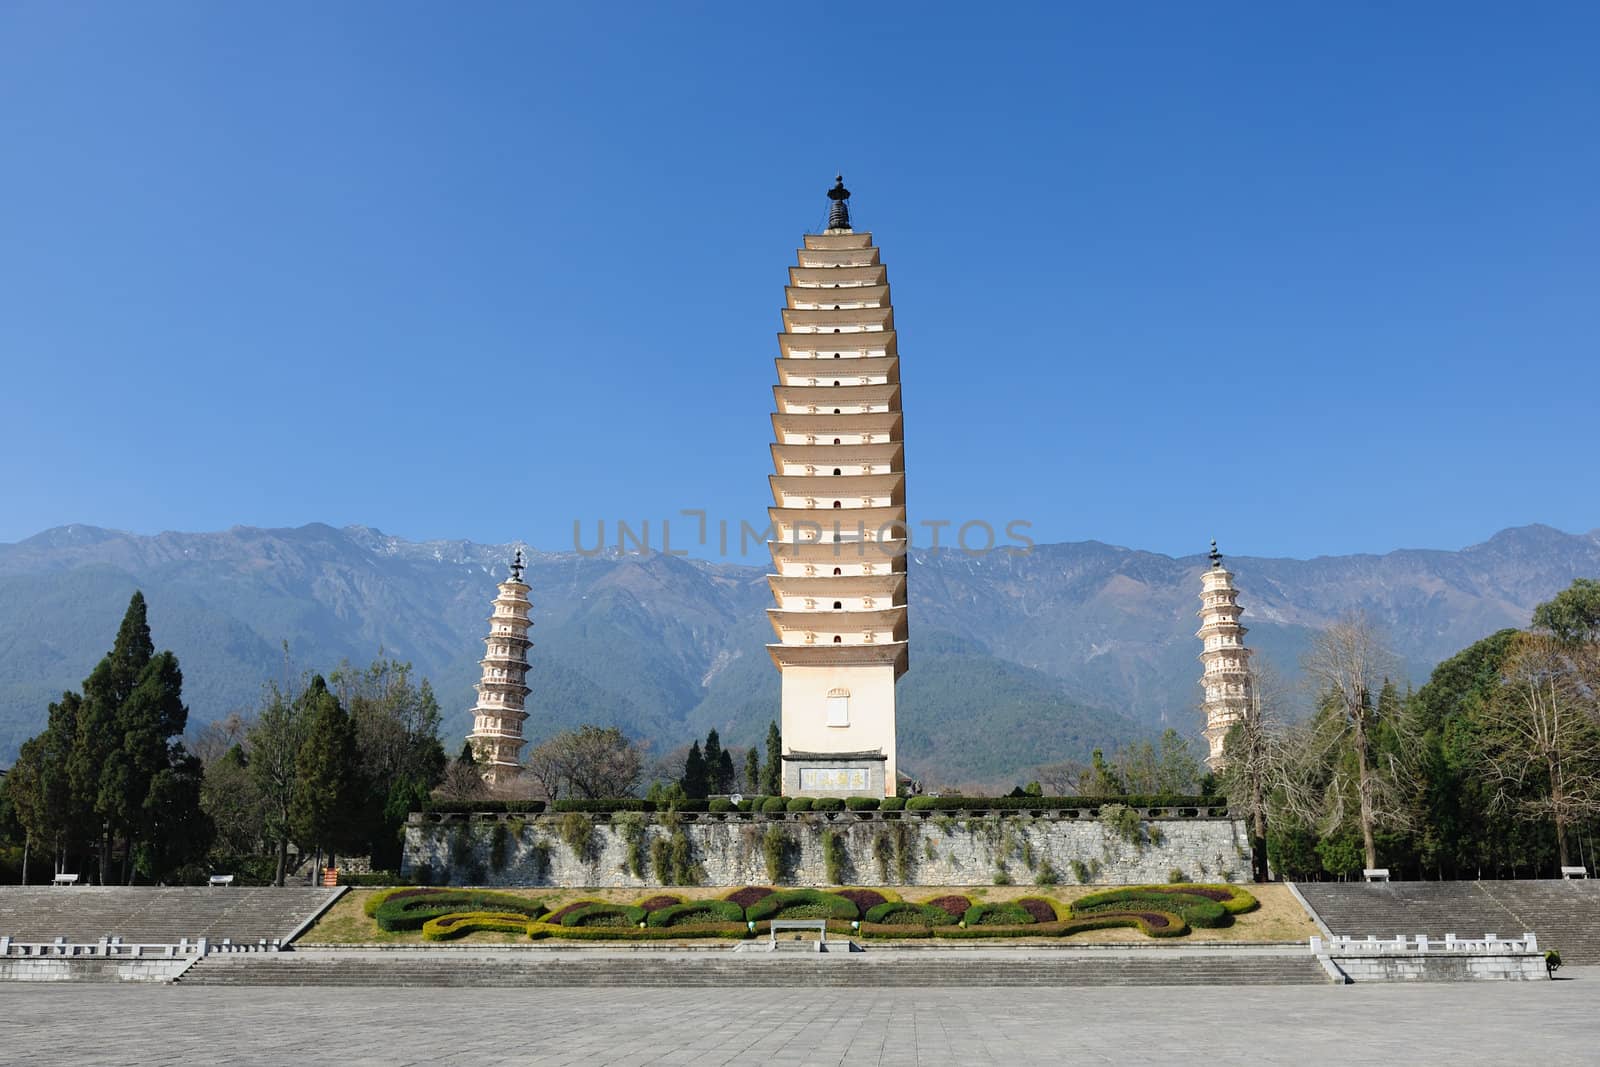 Buddhist pagodas in Dali, Yunnan province of China